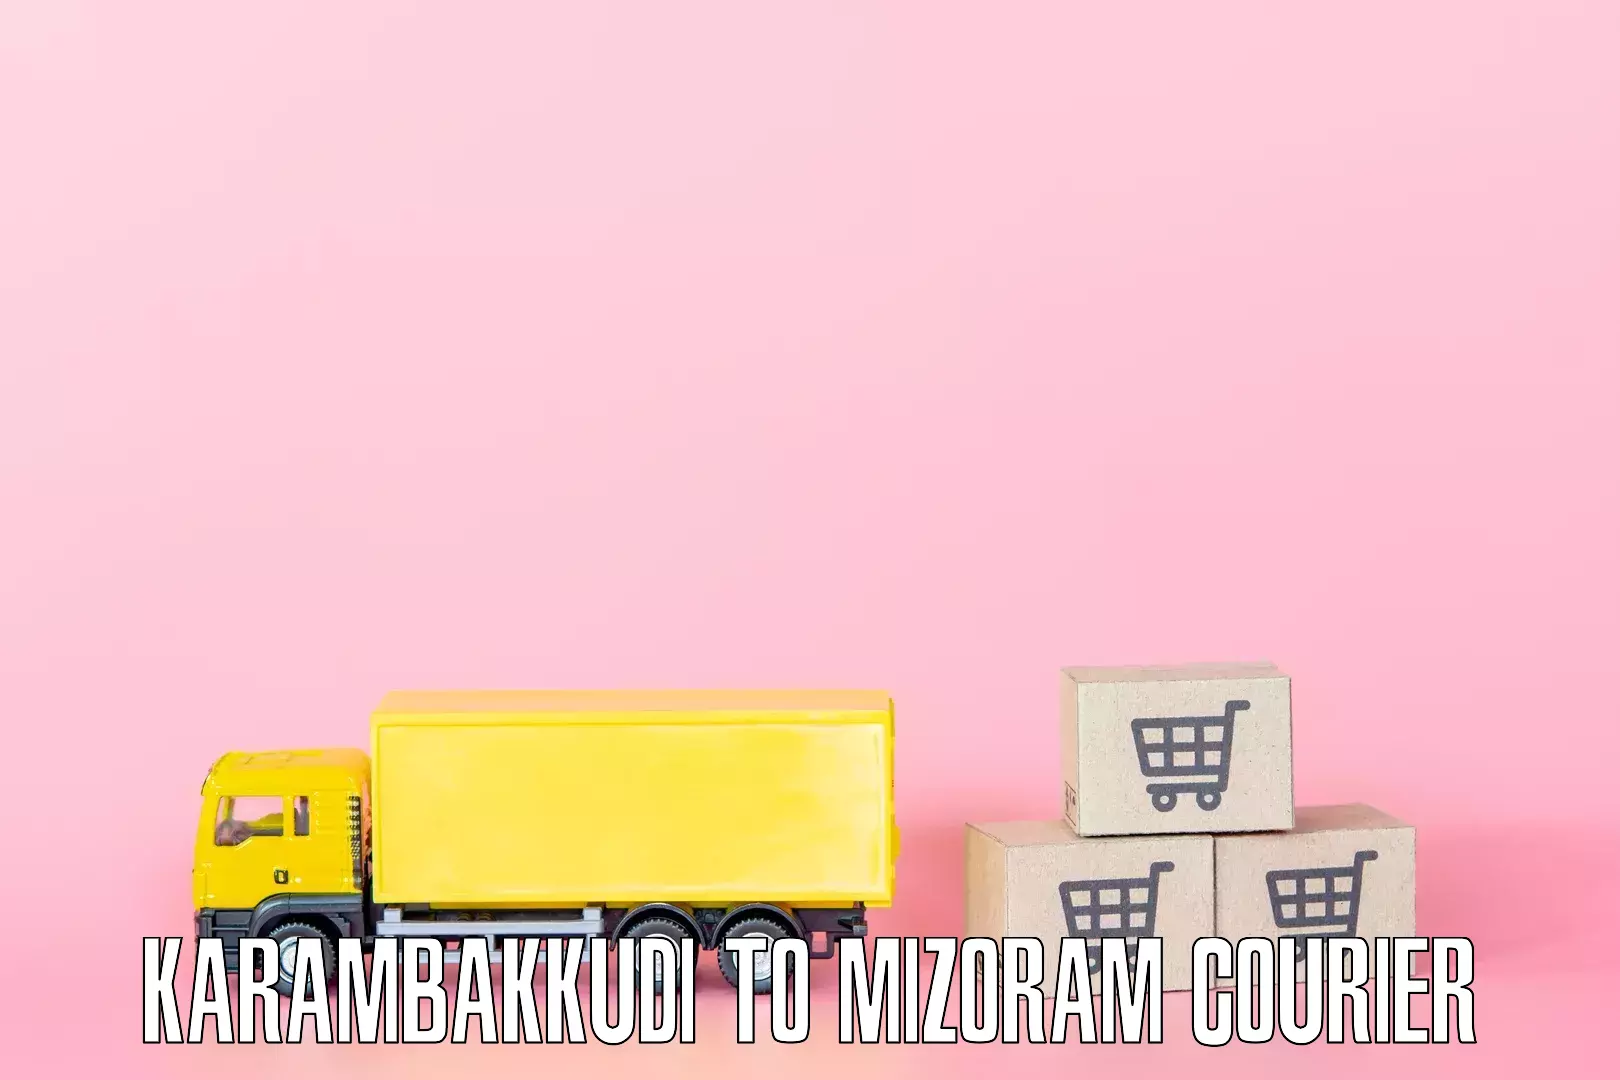 Cost-effective moving options in Karambakkudi to Mizoram